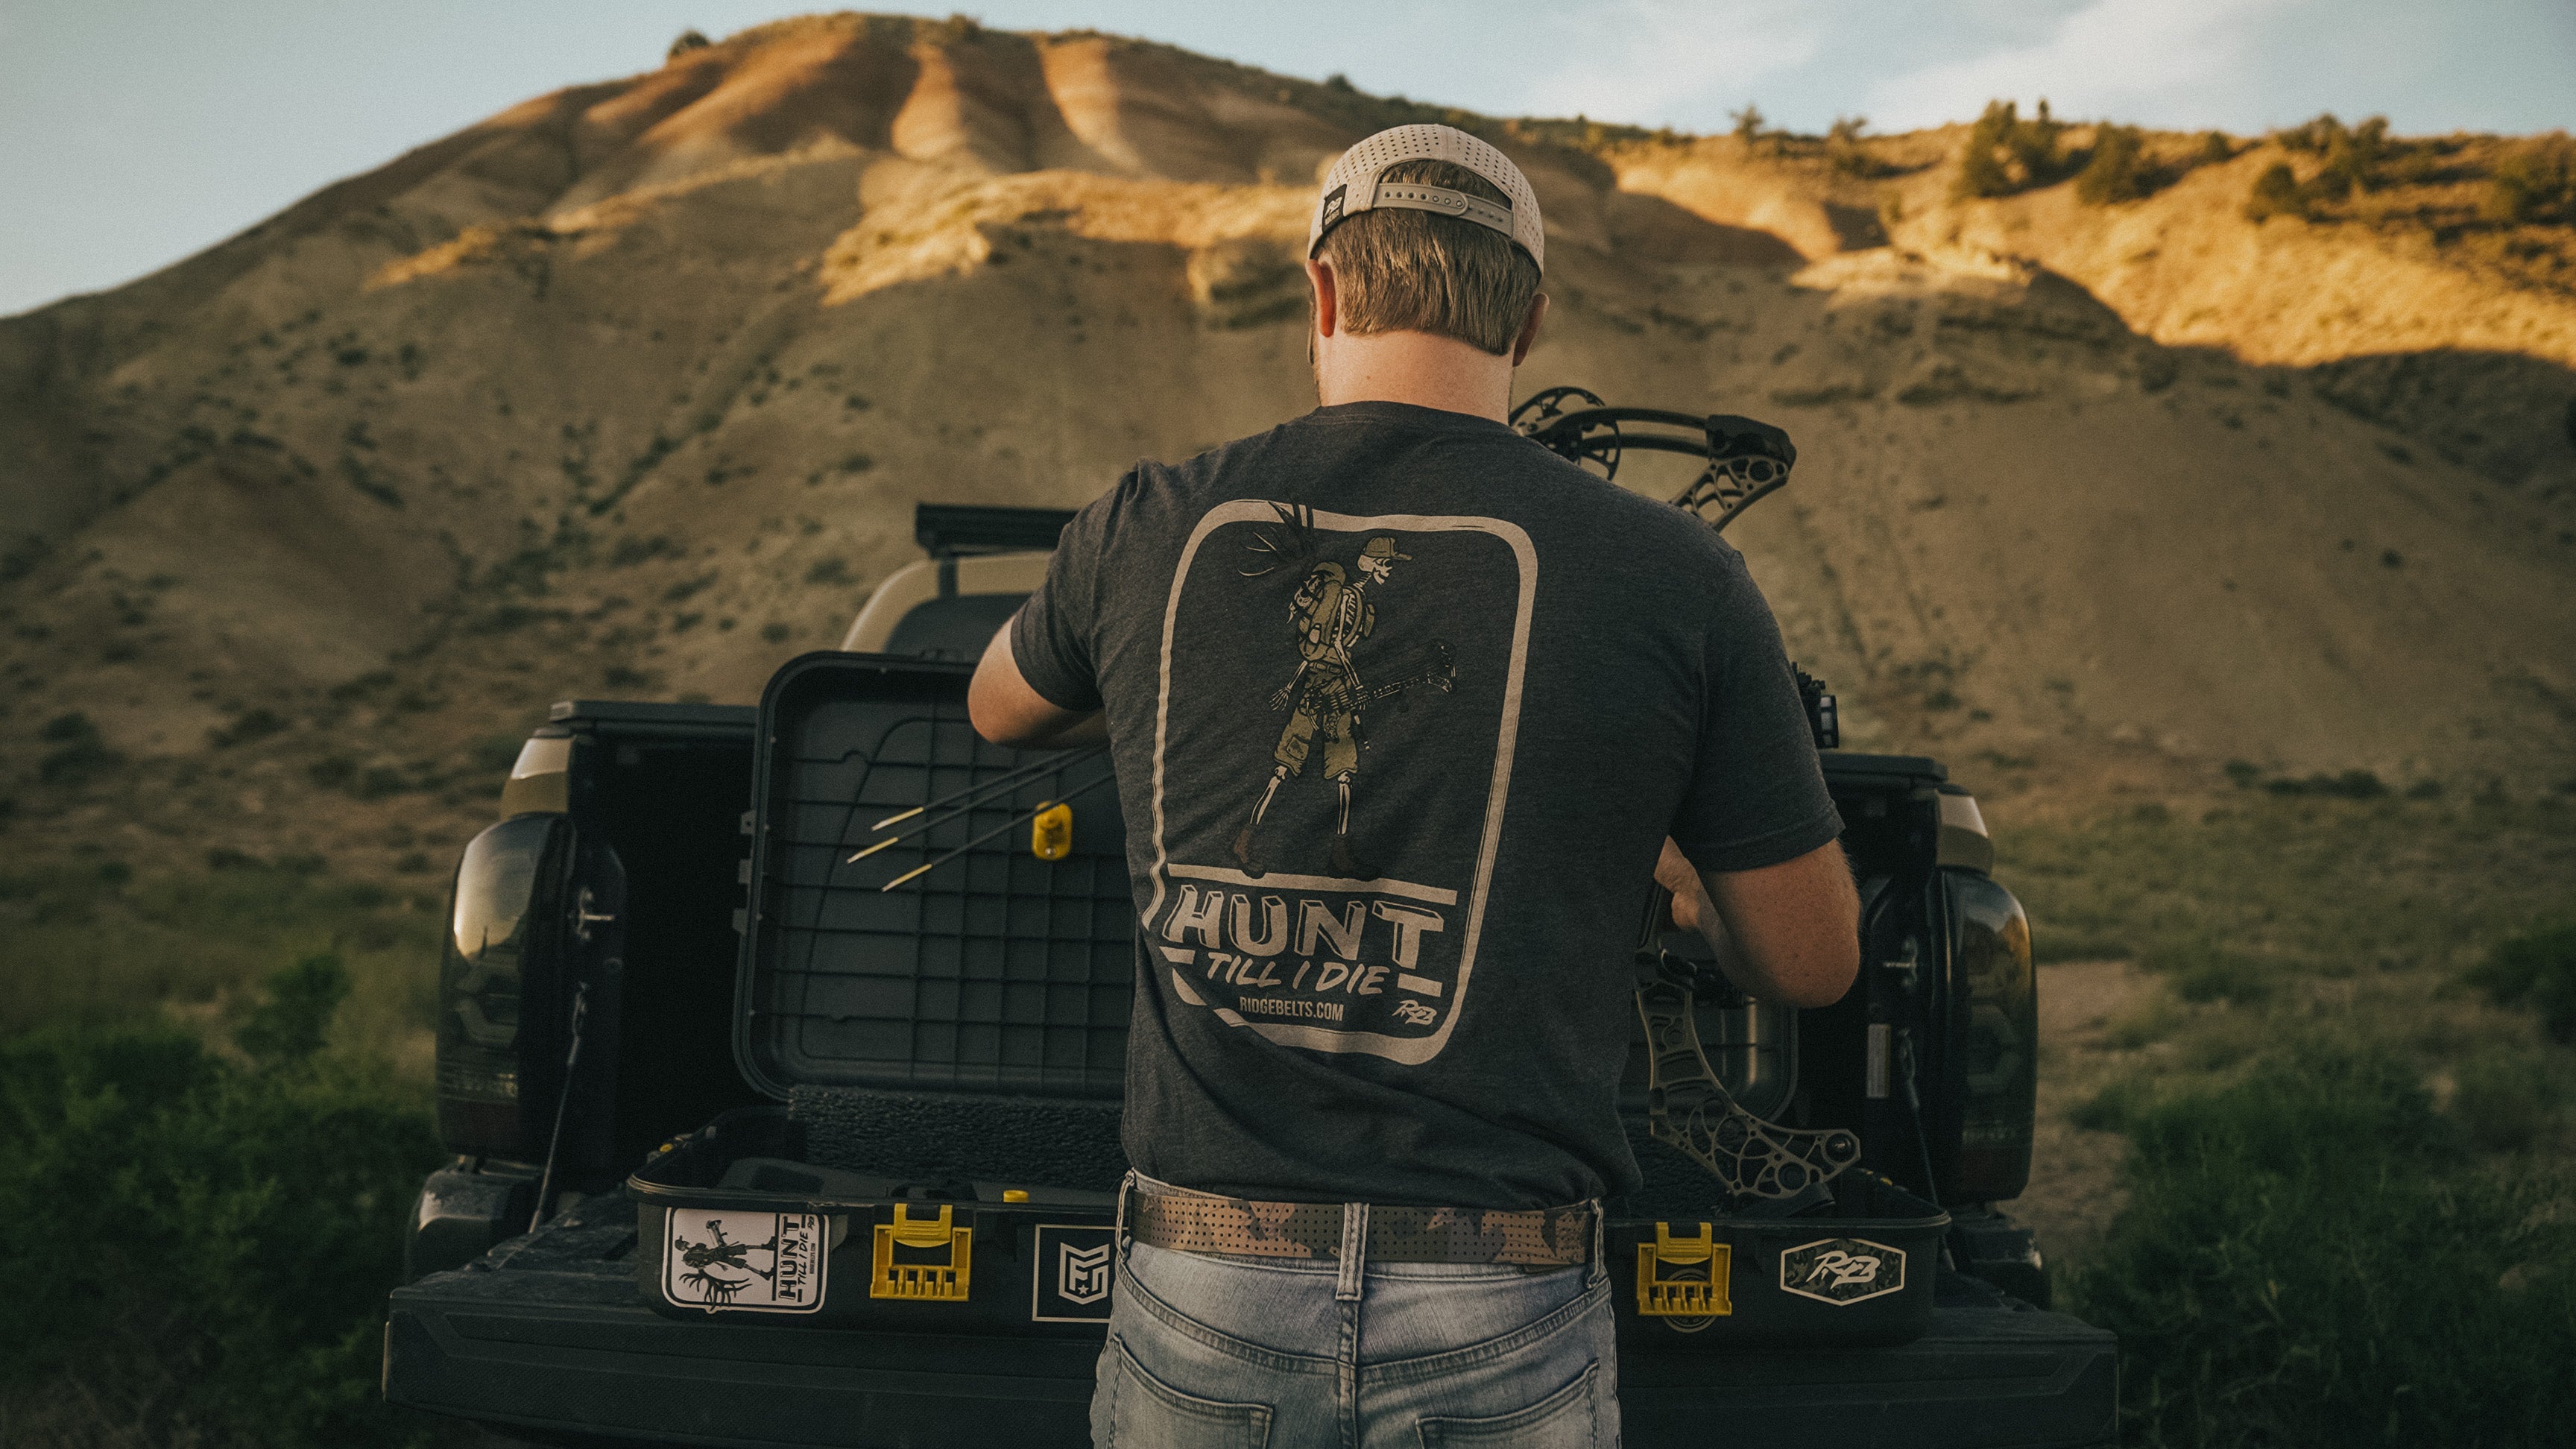 Bow hunting shirt. Skeleton hunting shirt design. Hunt till I die shirt from Ridge Belts